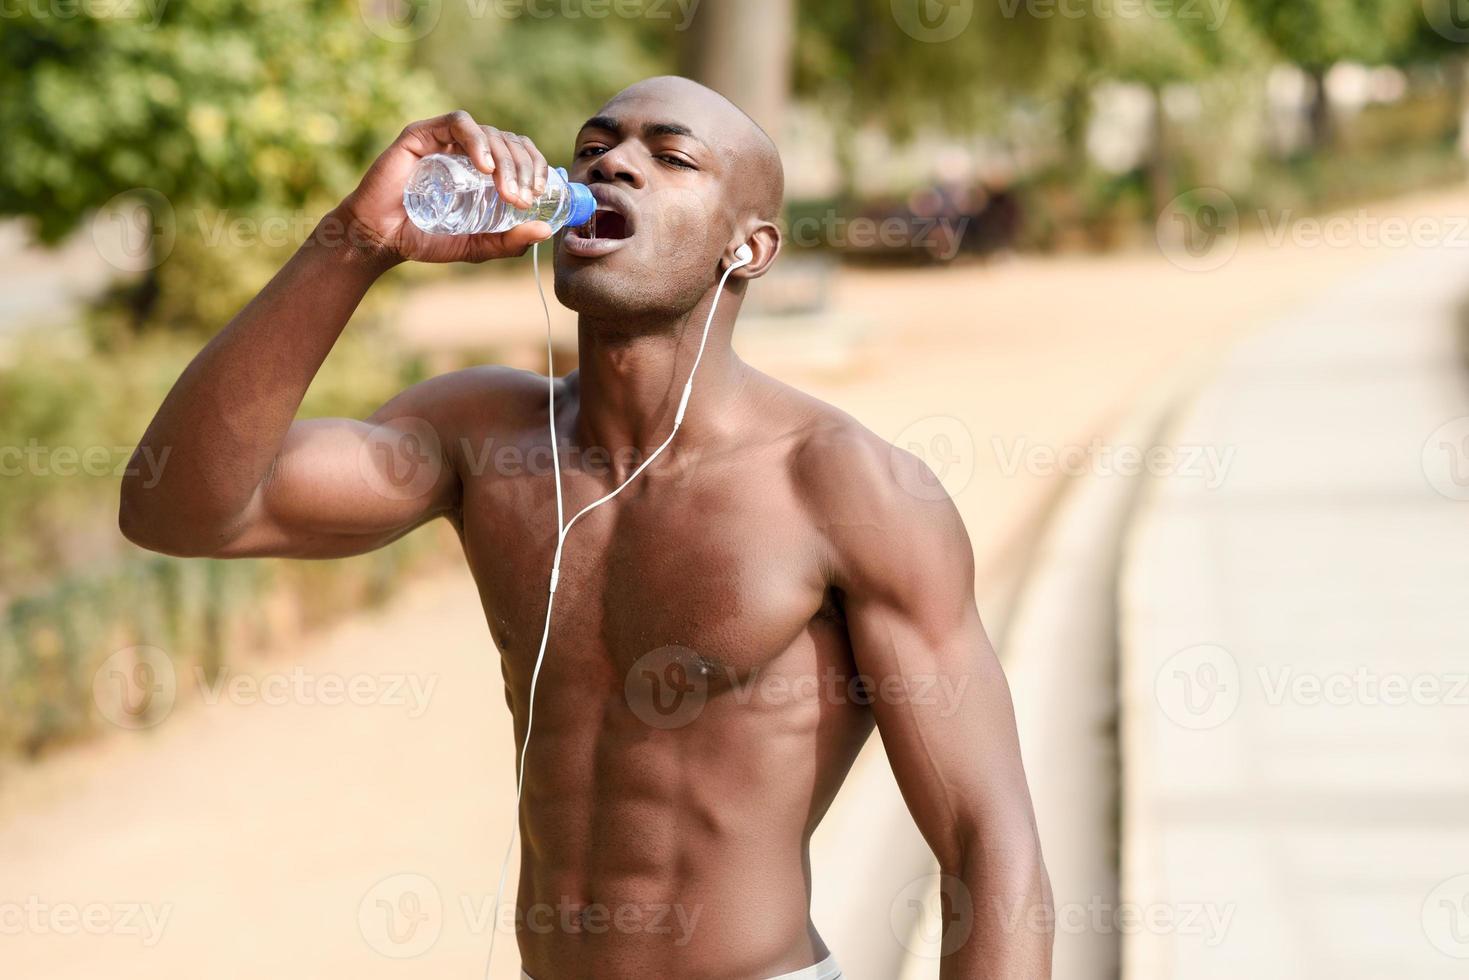 Black man drinking water after running in urban background. photo